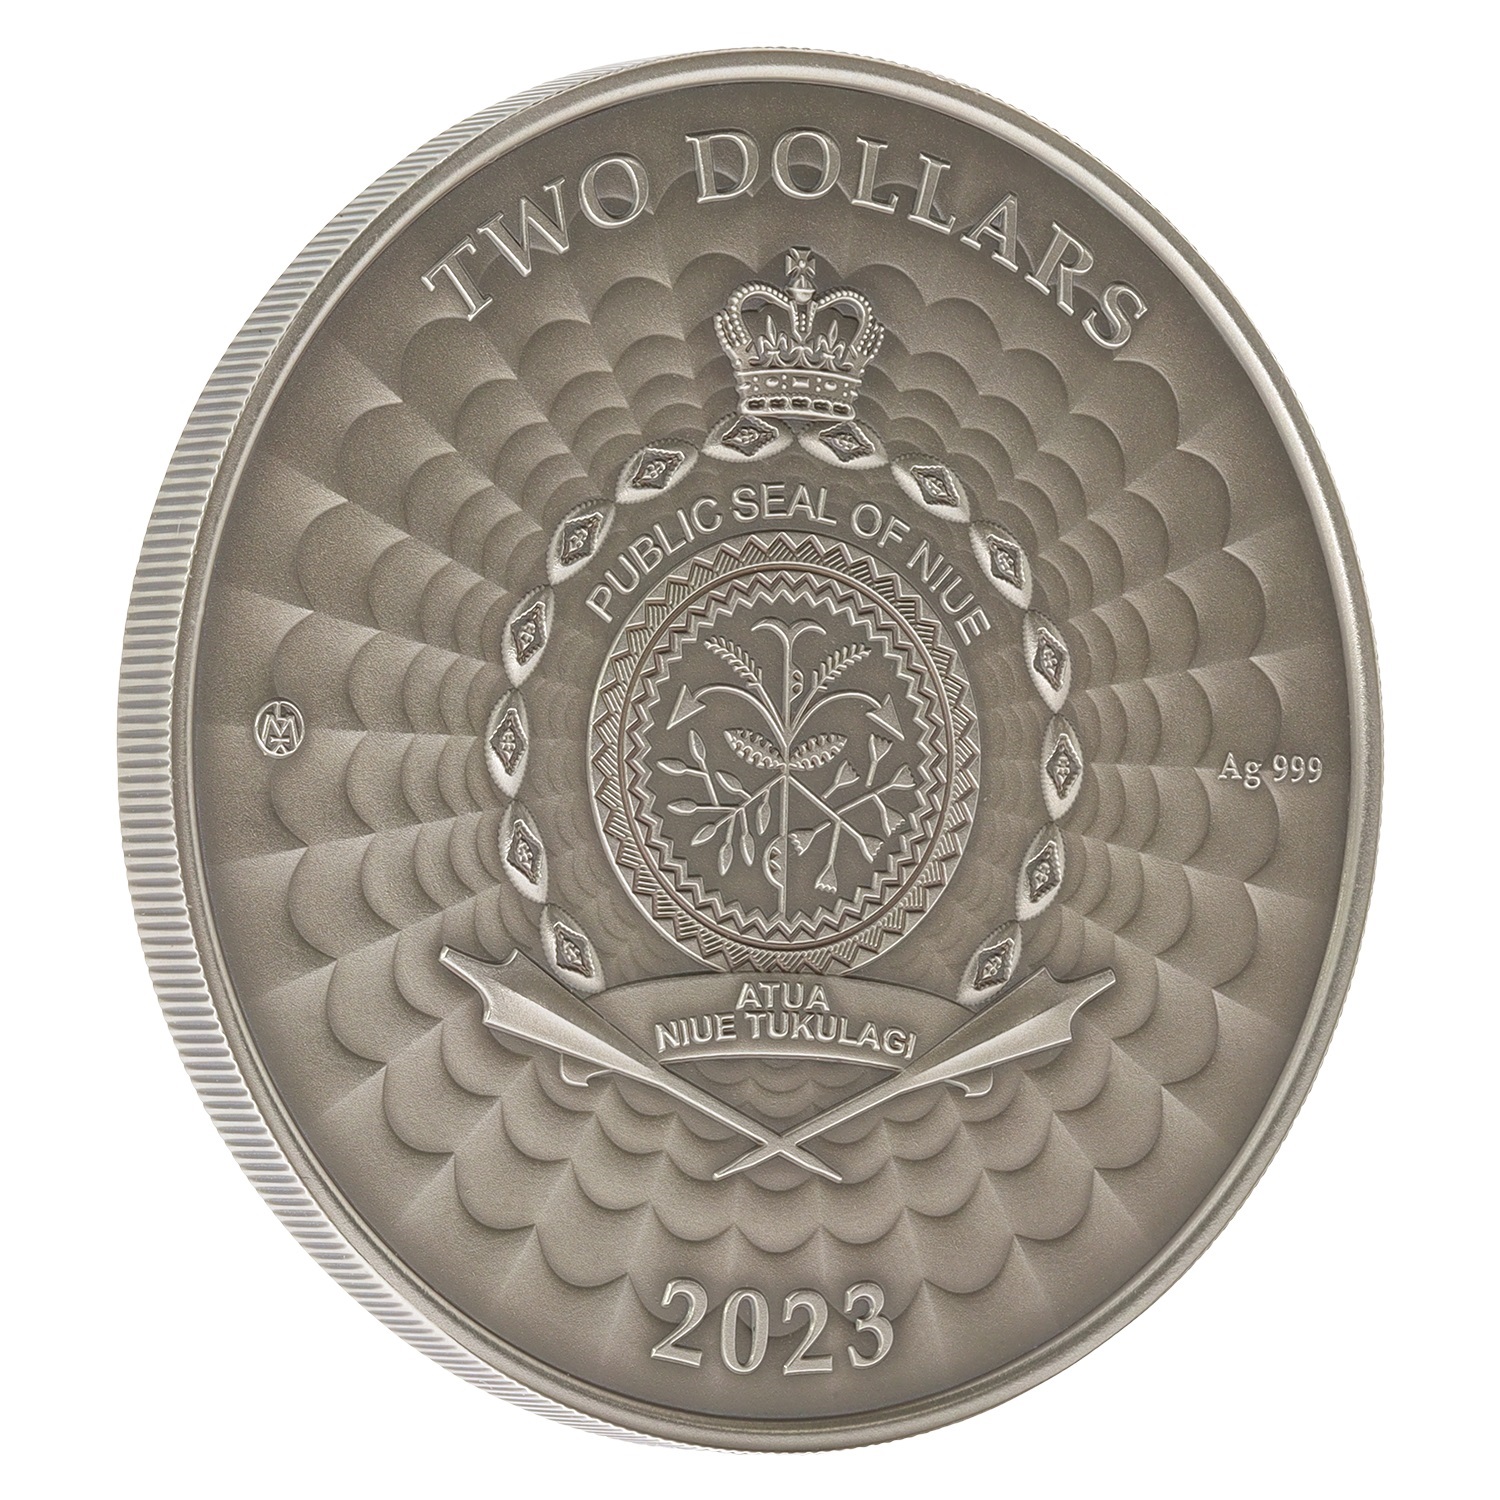 (W160.2.D.2023.15221675) Niue 2 Dollars Windigo 2023 - Antique silver Obverse (zoom)